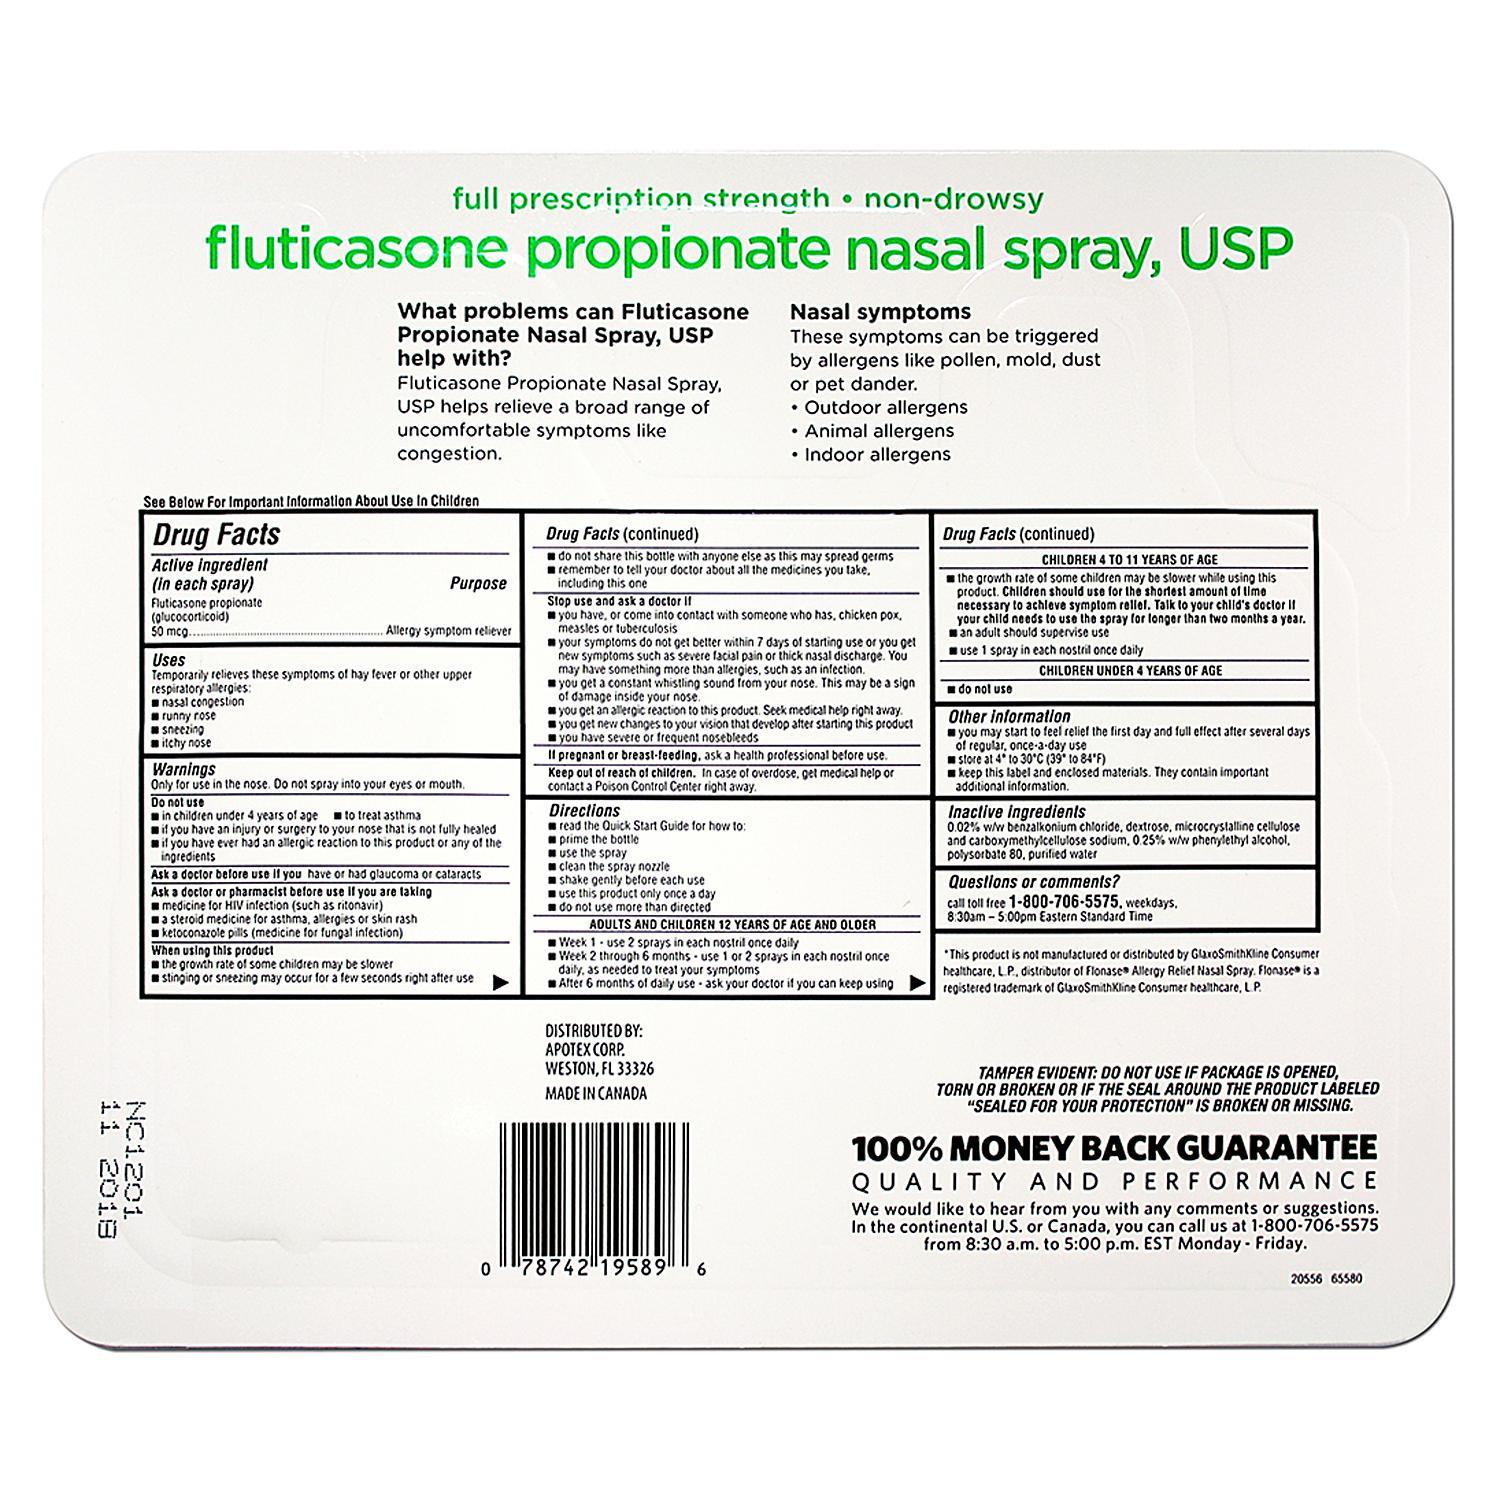 Fluticasone Propionate Nasal Spray (6 pk., 0.54 fl. oz. bottle) - image 2 of 3